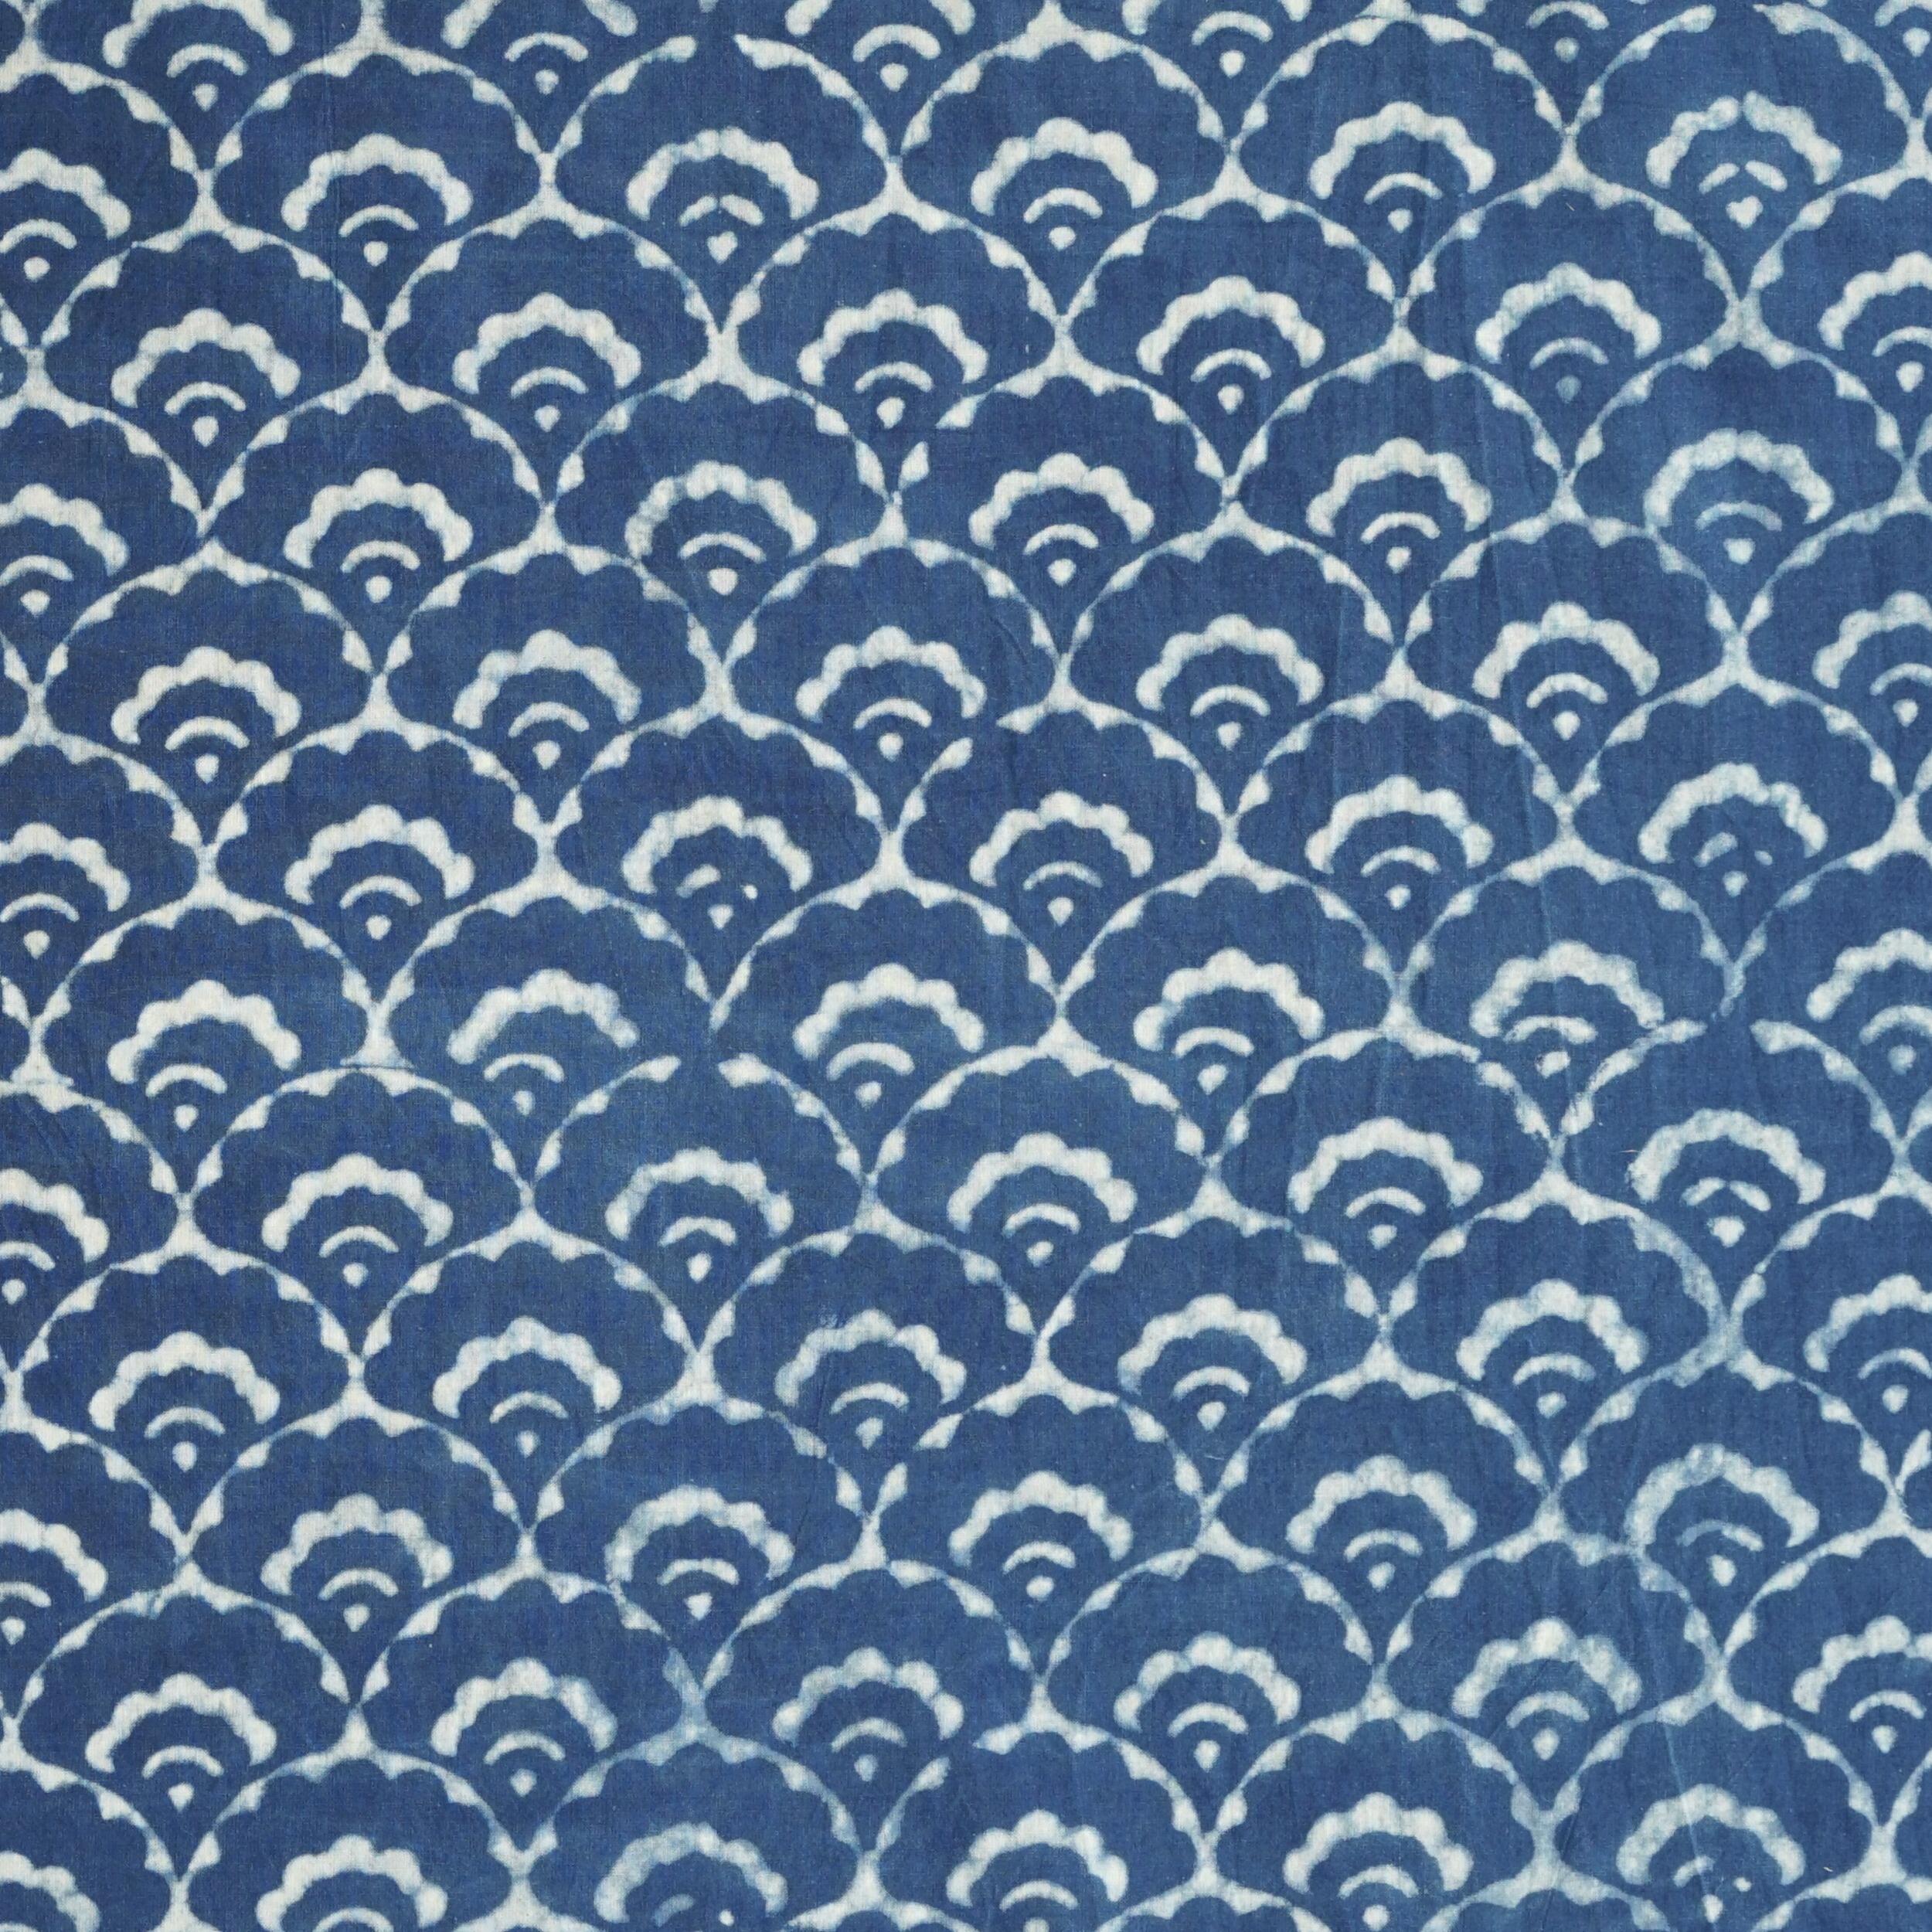 2 - AHM19 - Block-Printed Cloth - 100% Cotton Fabric - Indigo Dye - Abode of Clouds - Flat